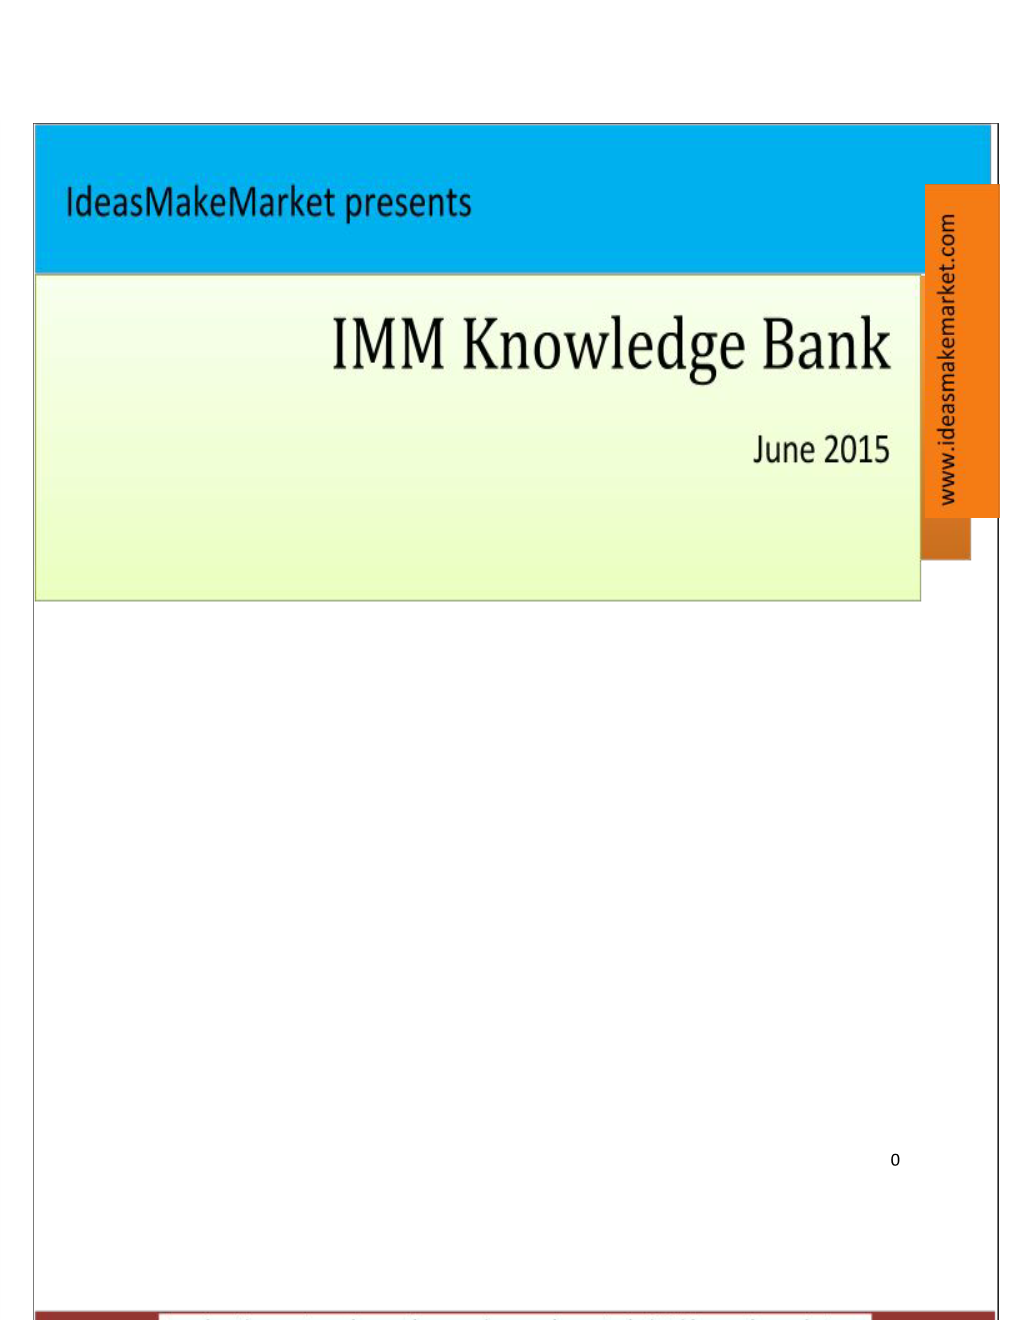 Immknowledgebankjune2015.Pdf